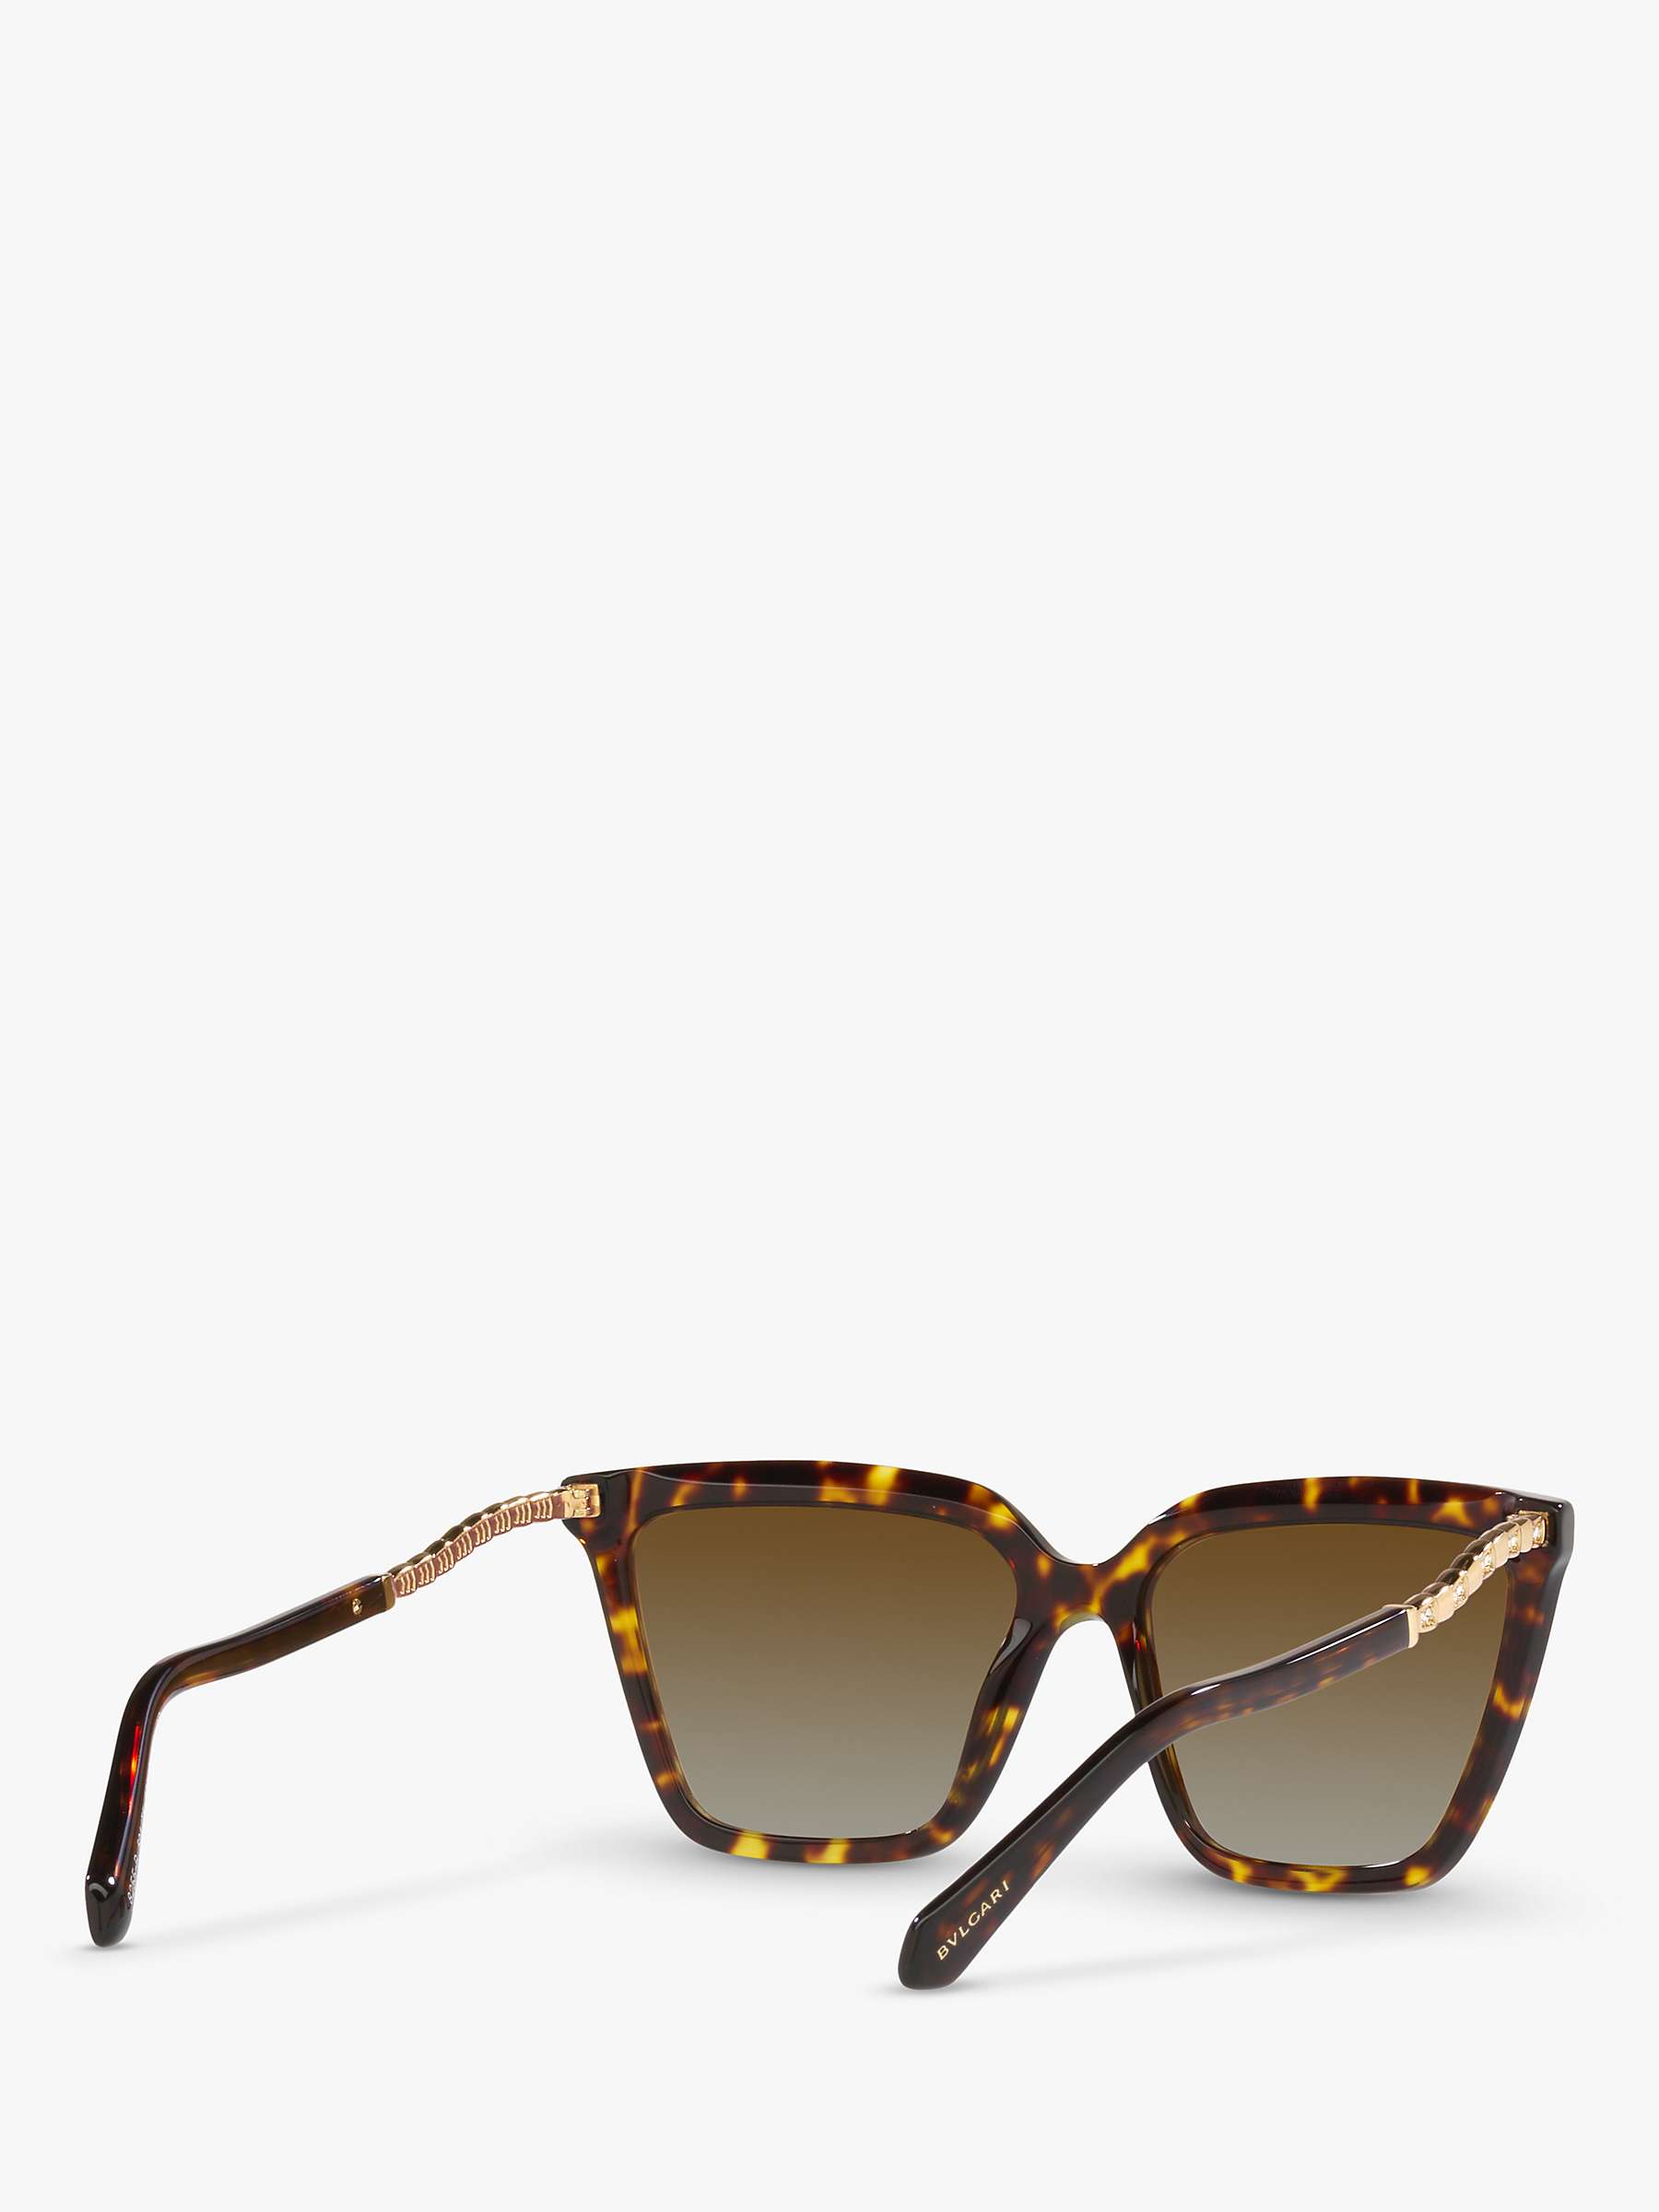 Buy BVLGARI BV8255B Women's Cat's Eye Sunglasses, Tortoise/Brown Gradient Online at johnlewis.com